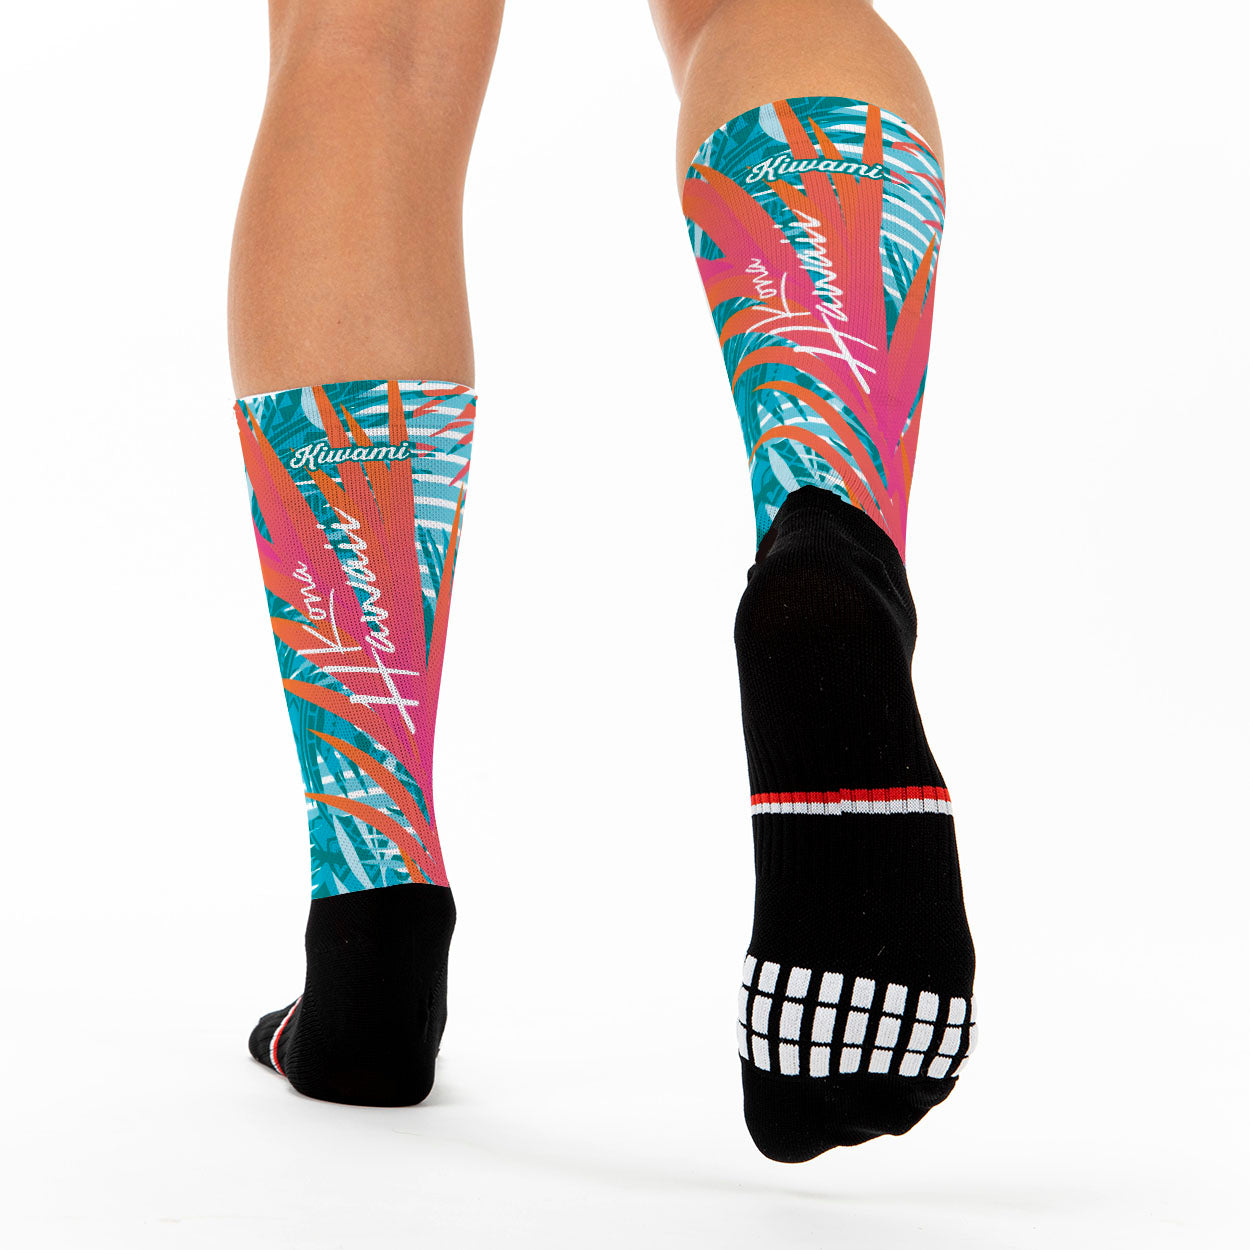 Kona, Hawaii, triathlon emblématique - chaussettes - socks color hawaii